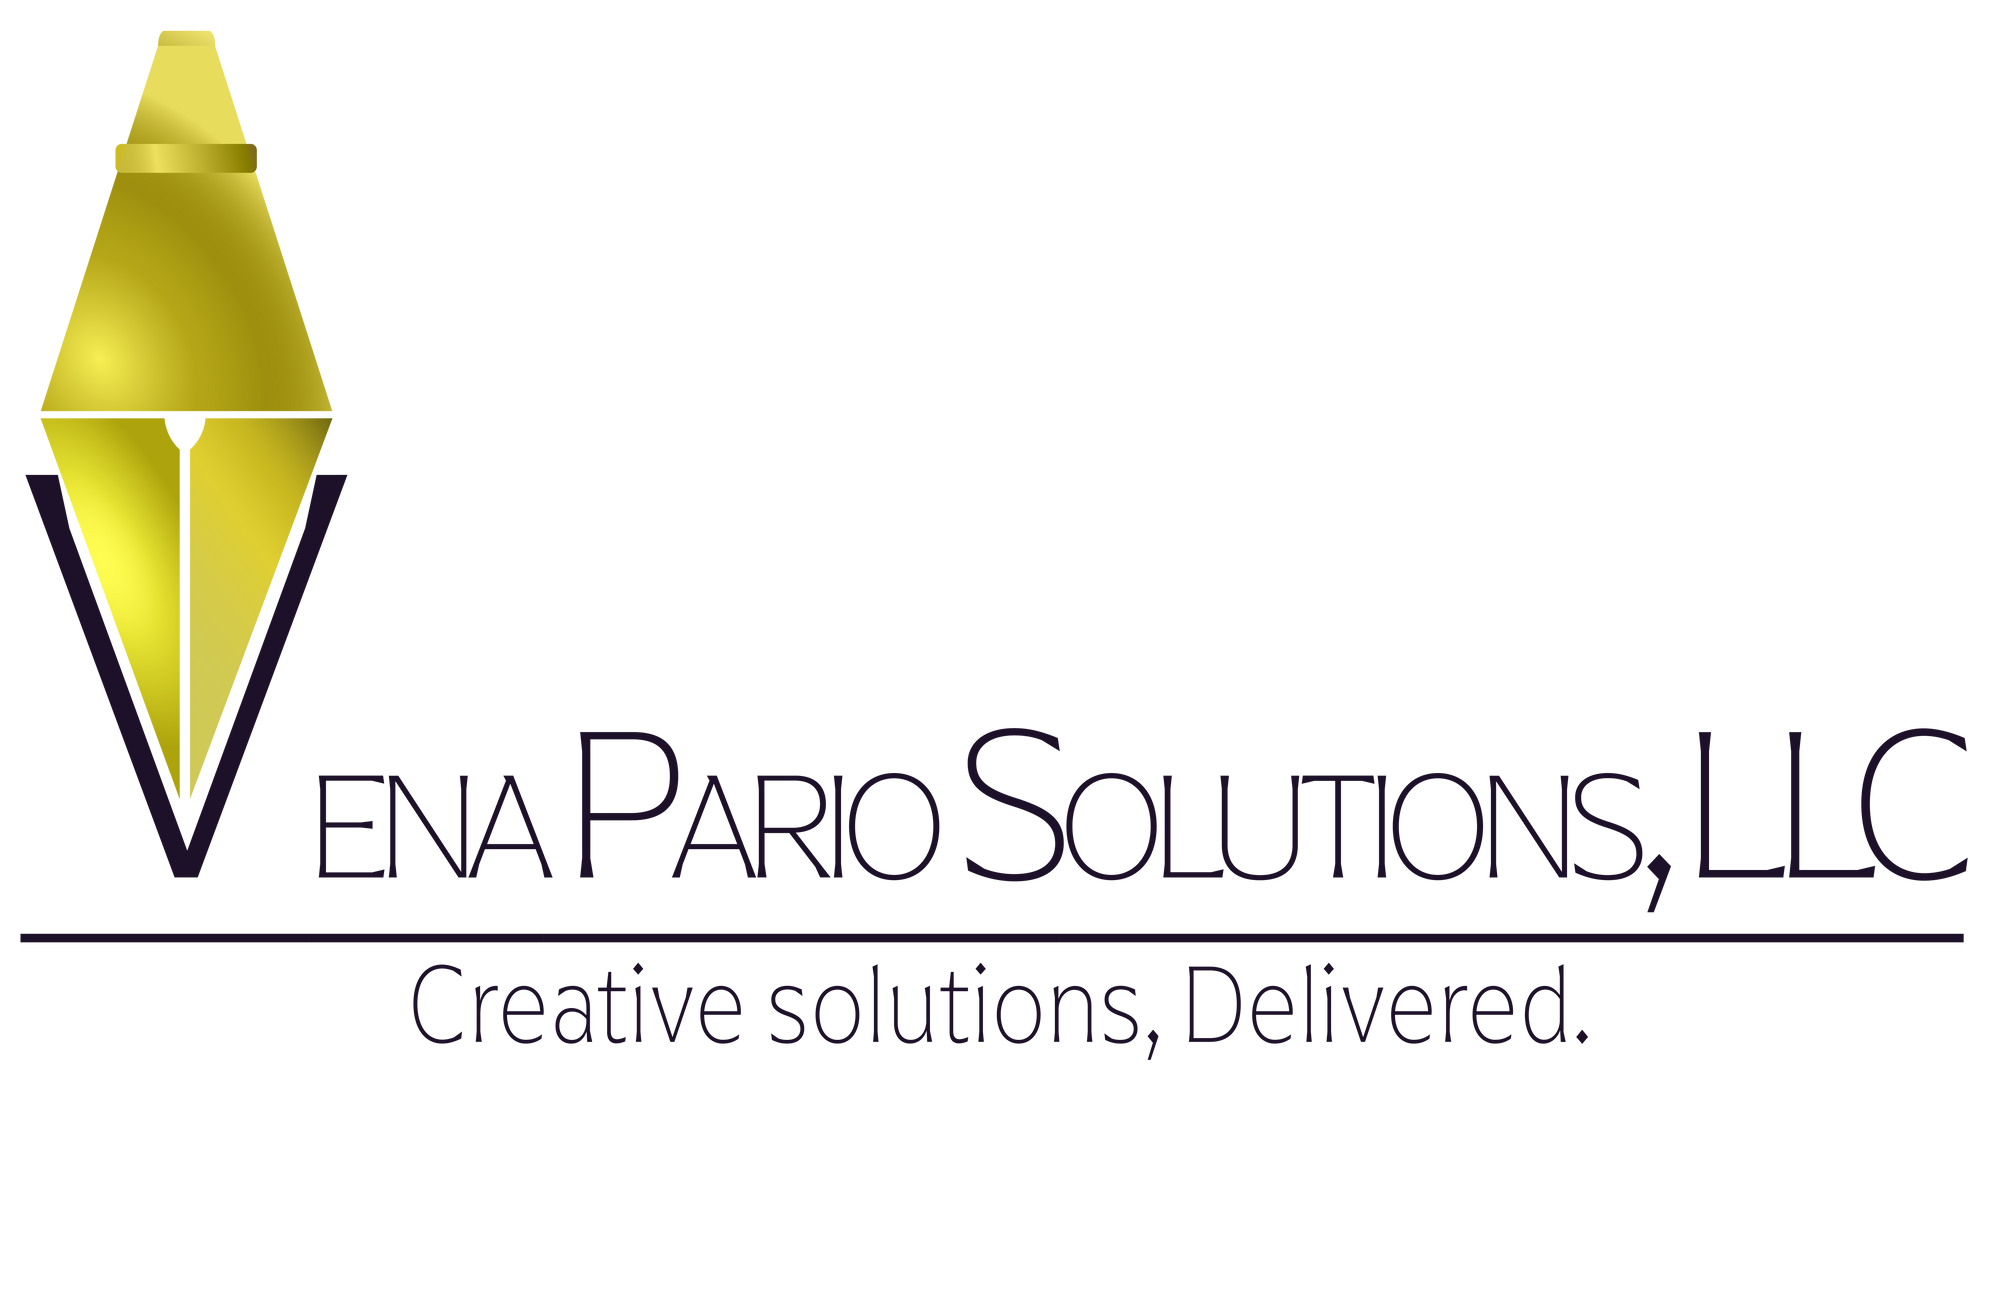 Vena Pario Solutions, LLC